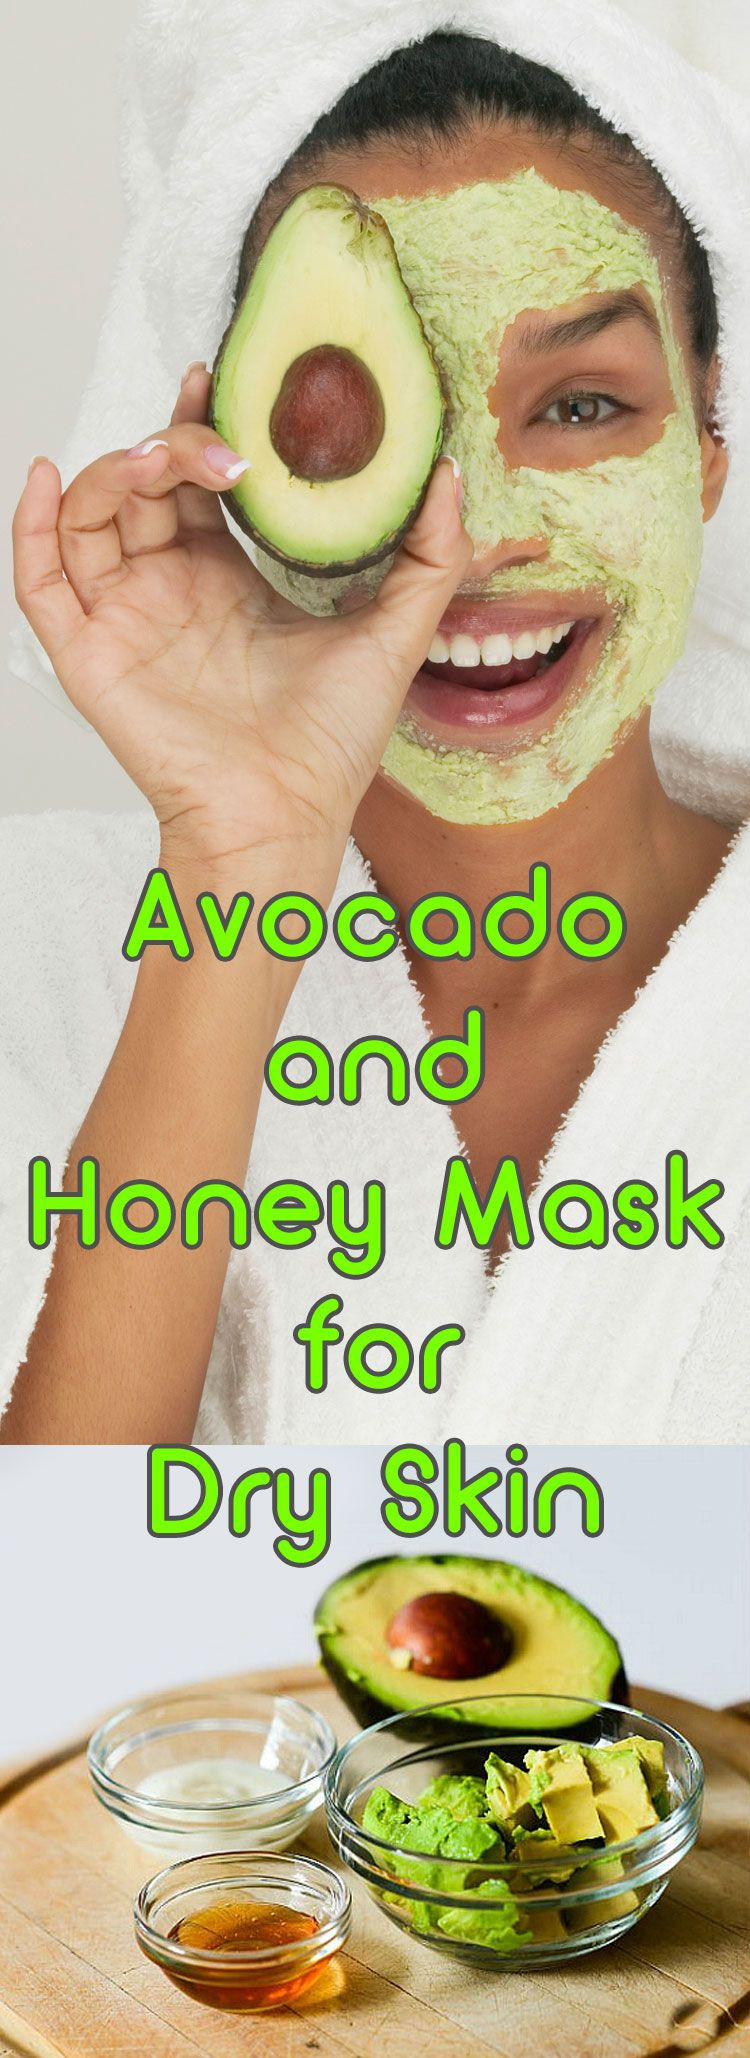 DIY Facial Mask Recipes
 5 Best Homemade Face Mask Recipes for Beautiful Skin